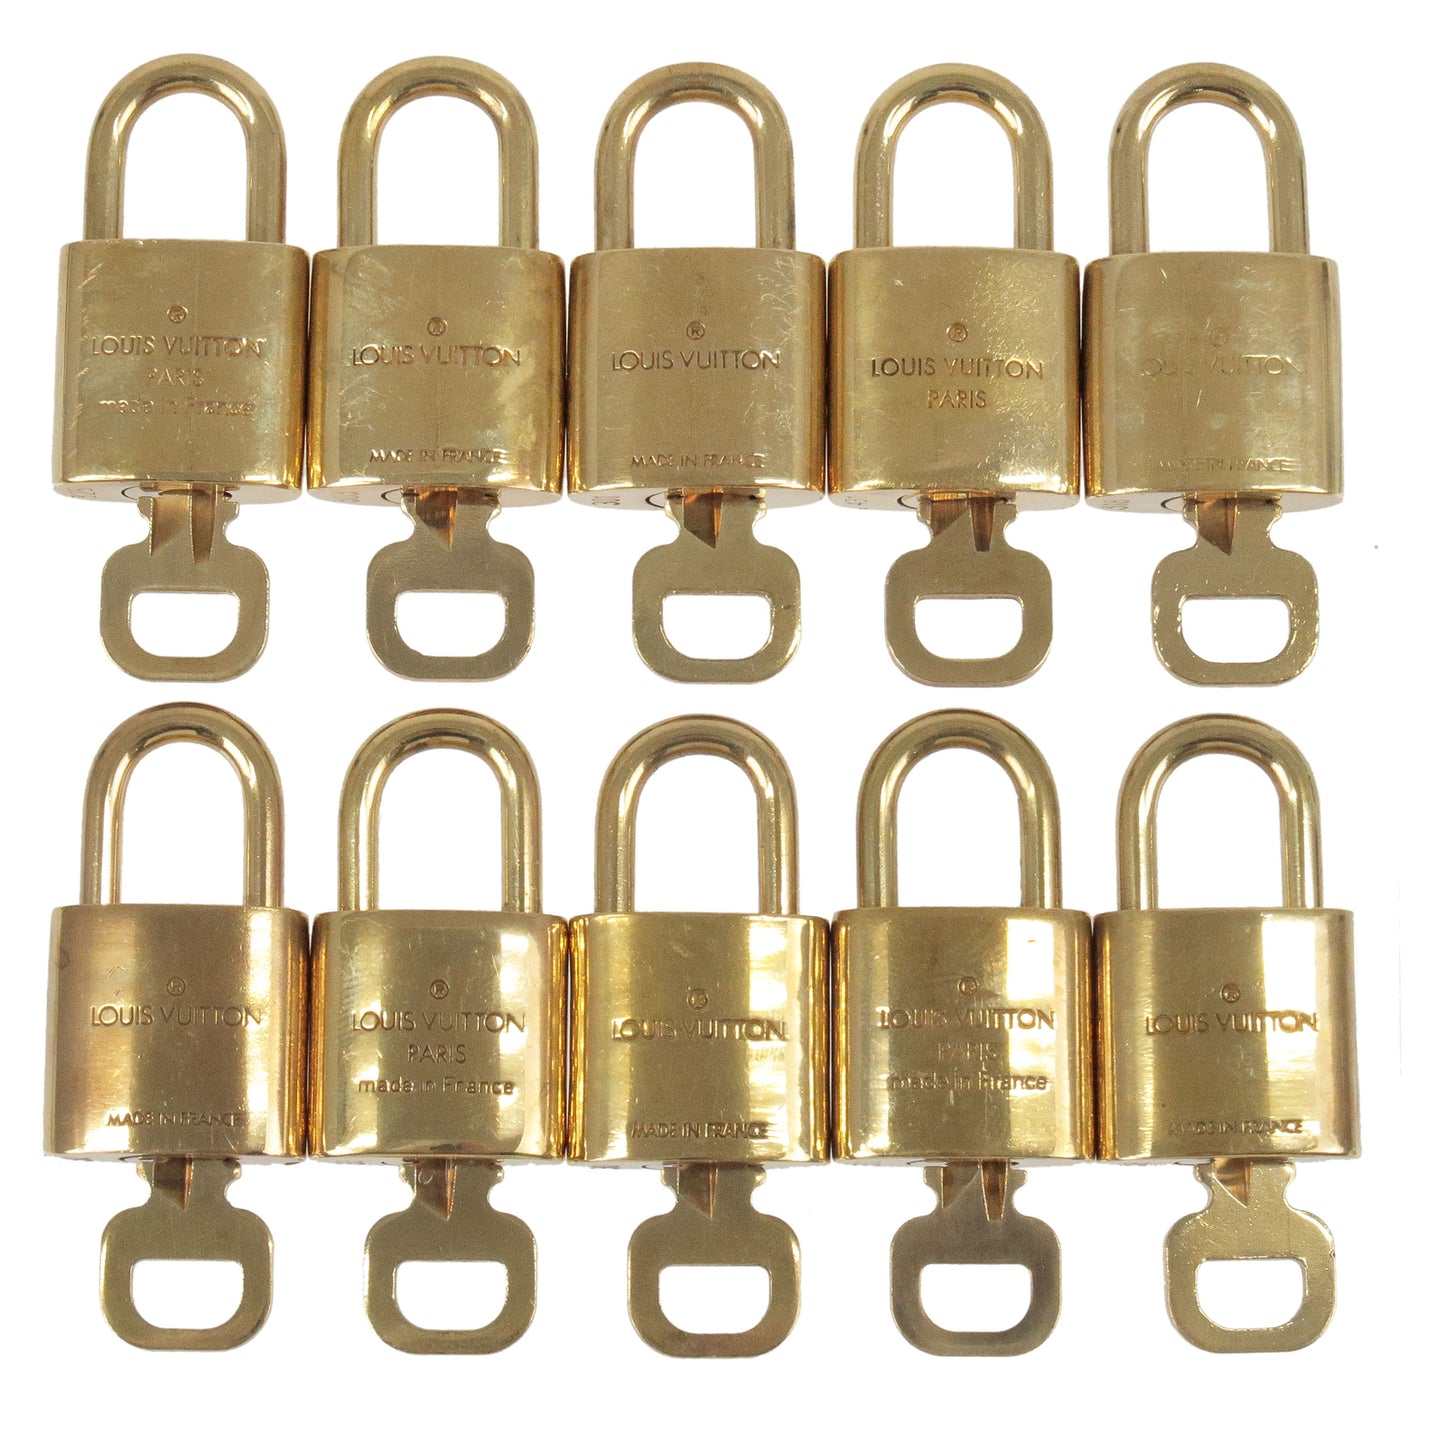 Authentic LOUIS VUITTON Padlock Key 318 Set 1 Lock 2 -  Norway